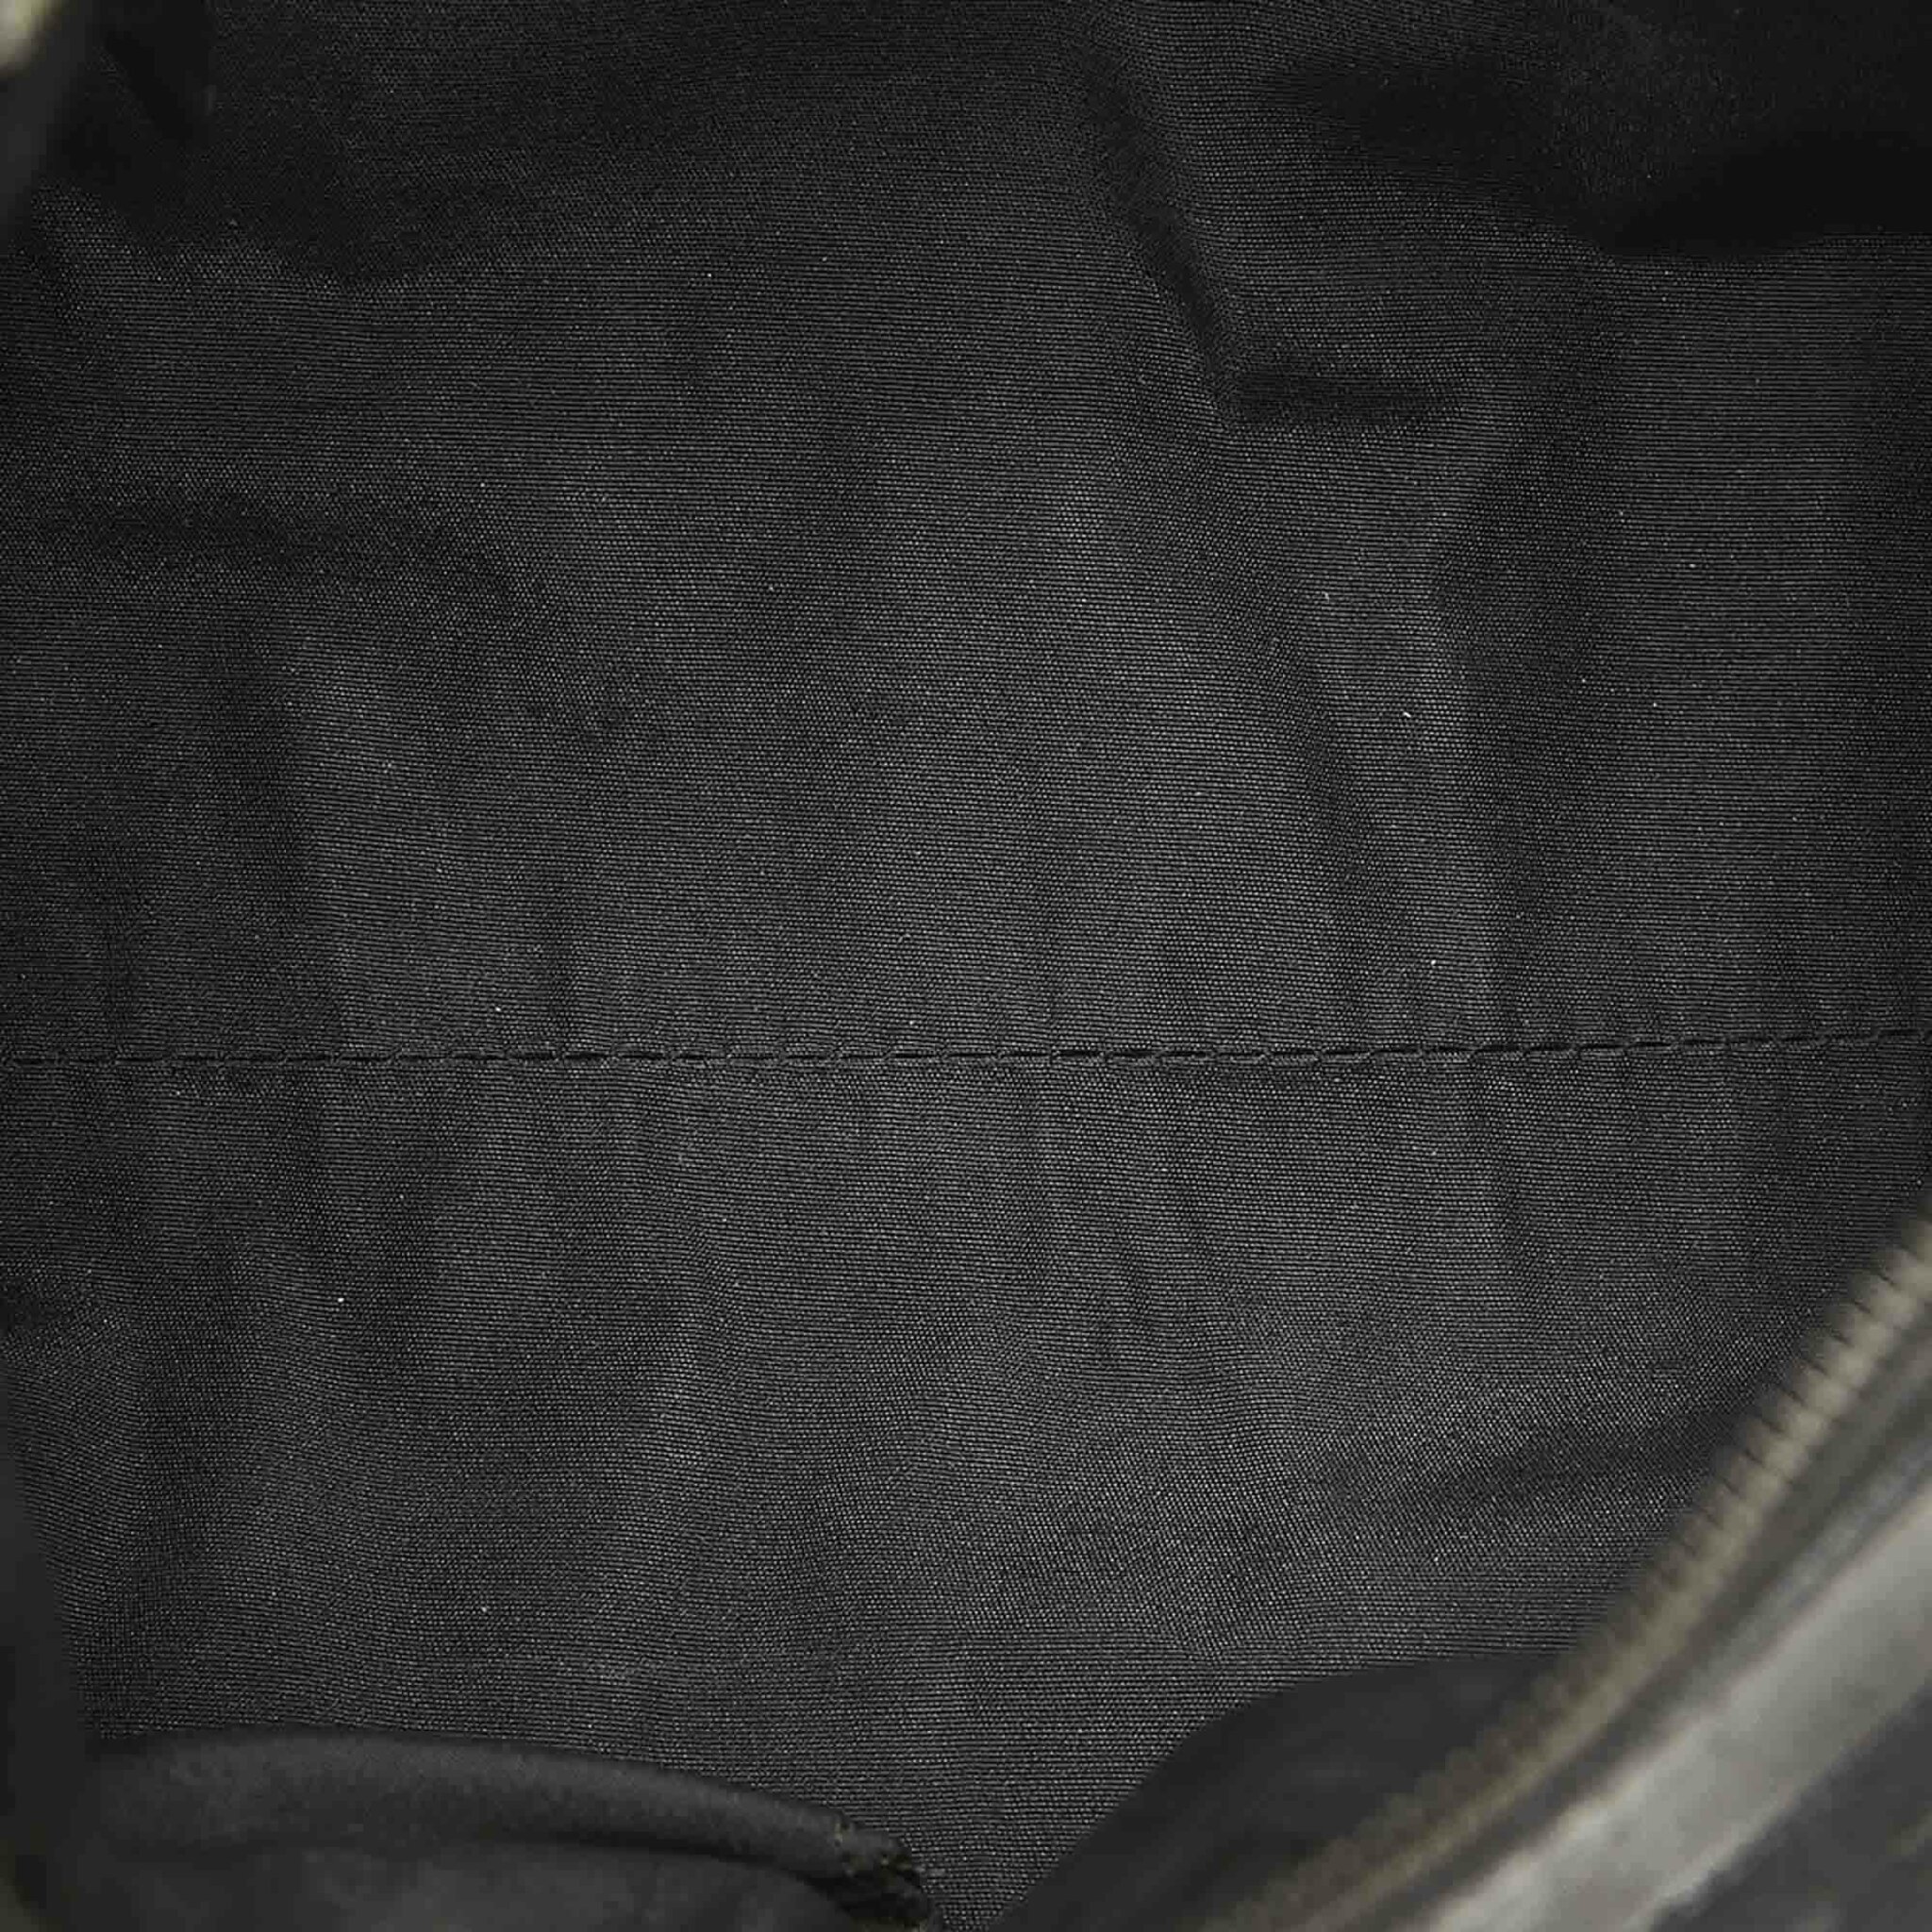 Gucci Horsebit Abbey D-ring Leather Shoulder Bag, black